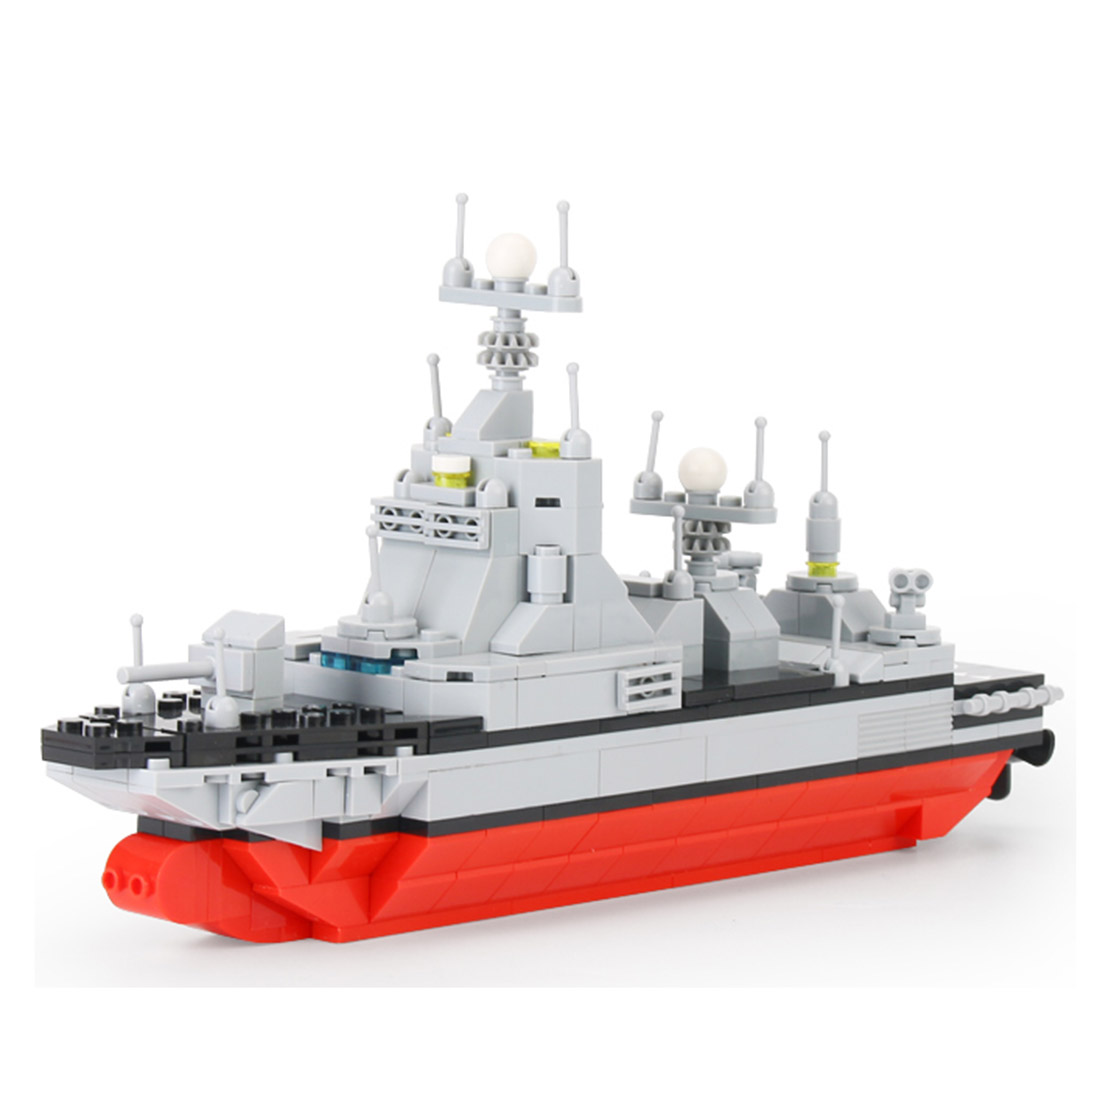 Destroyer Warship Model Assembly Toy Building Blocks Set (355PCS)